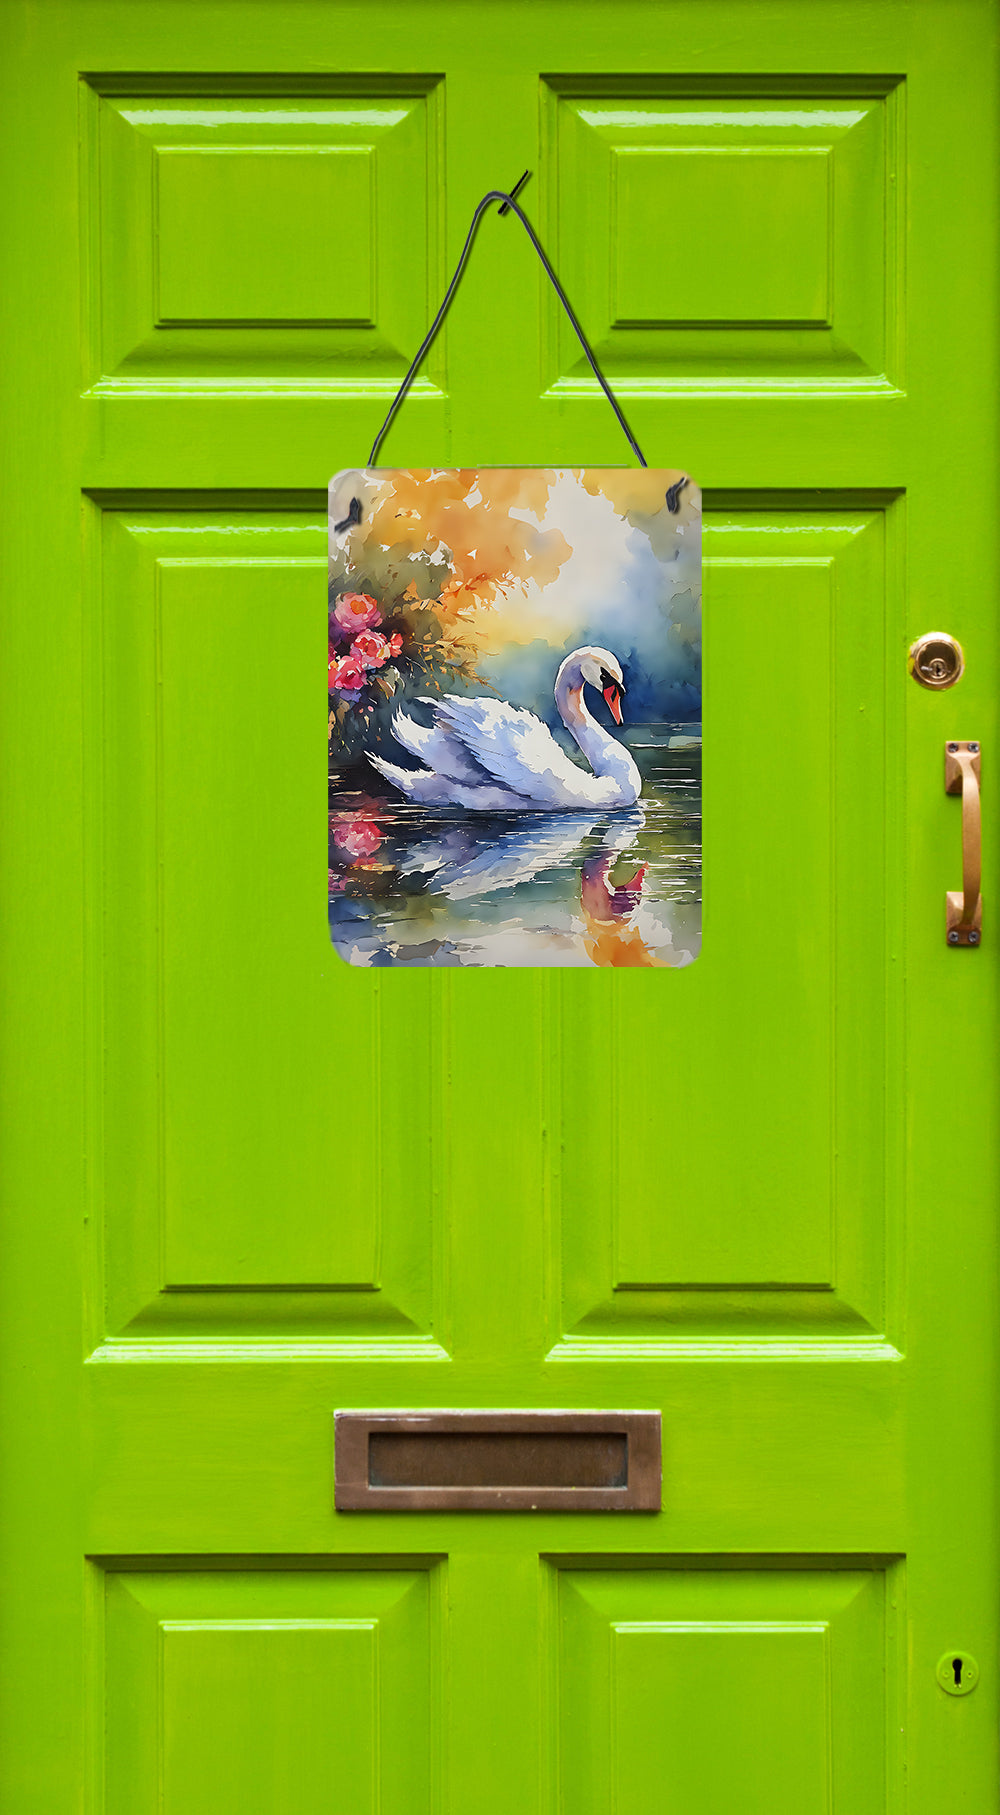 Buy this Swan Wall or Door Hanging Prints